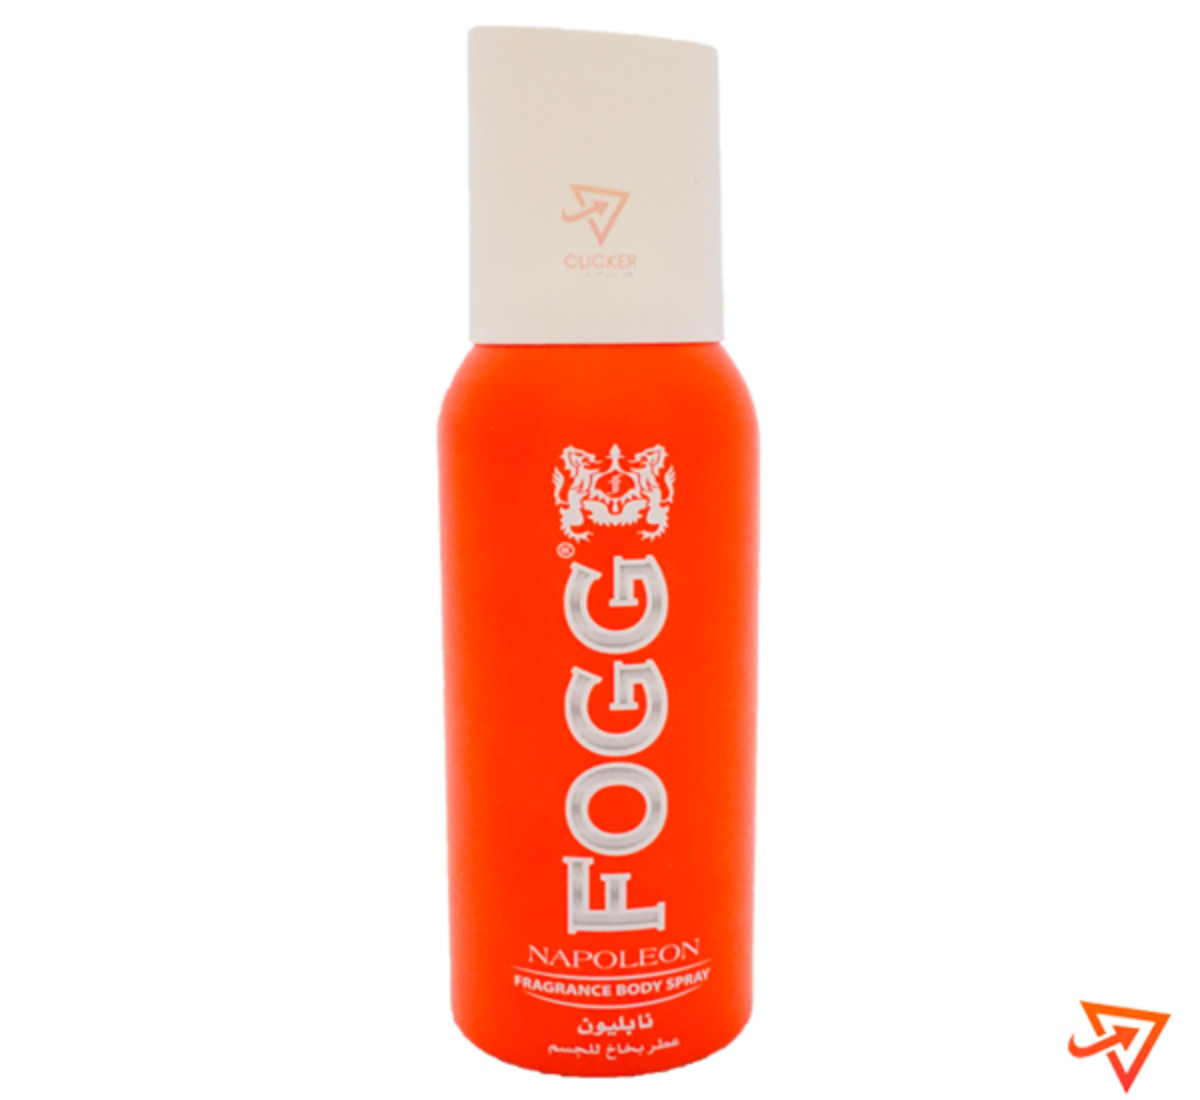 Clicker product 120ml FOGG fragrance body spray-Napoleon 1019